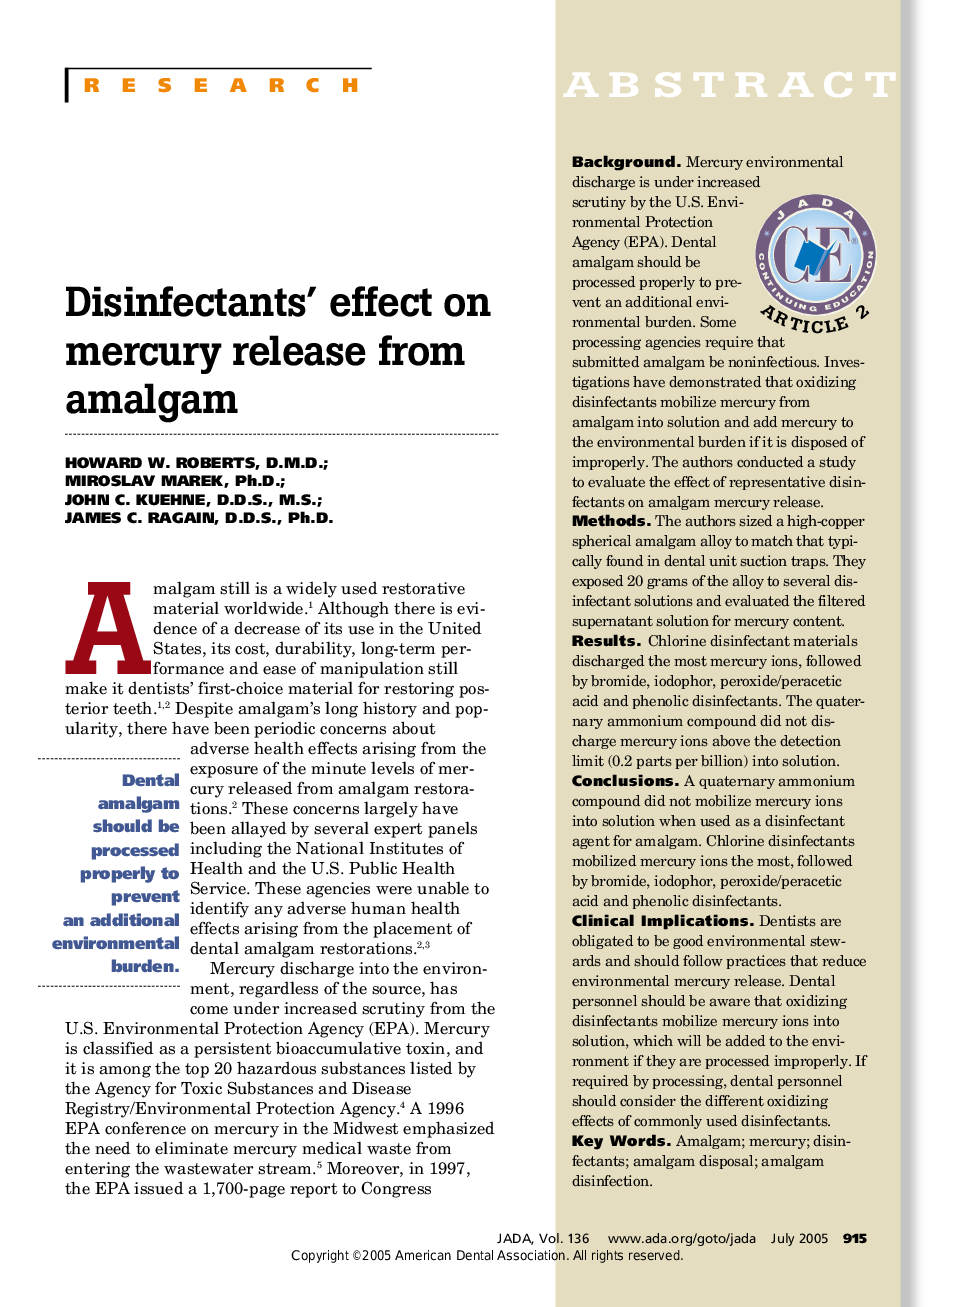 Disinfectants' effect on mercury release from amalgam